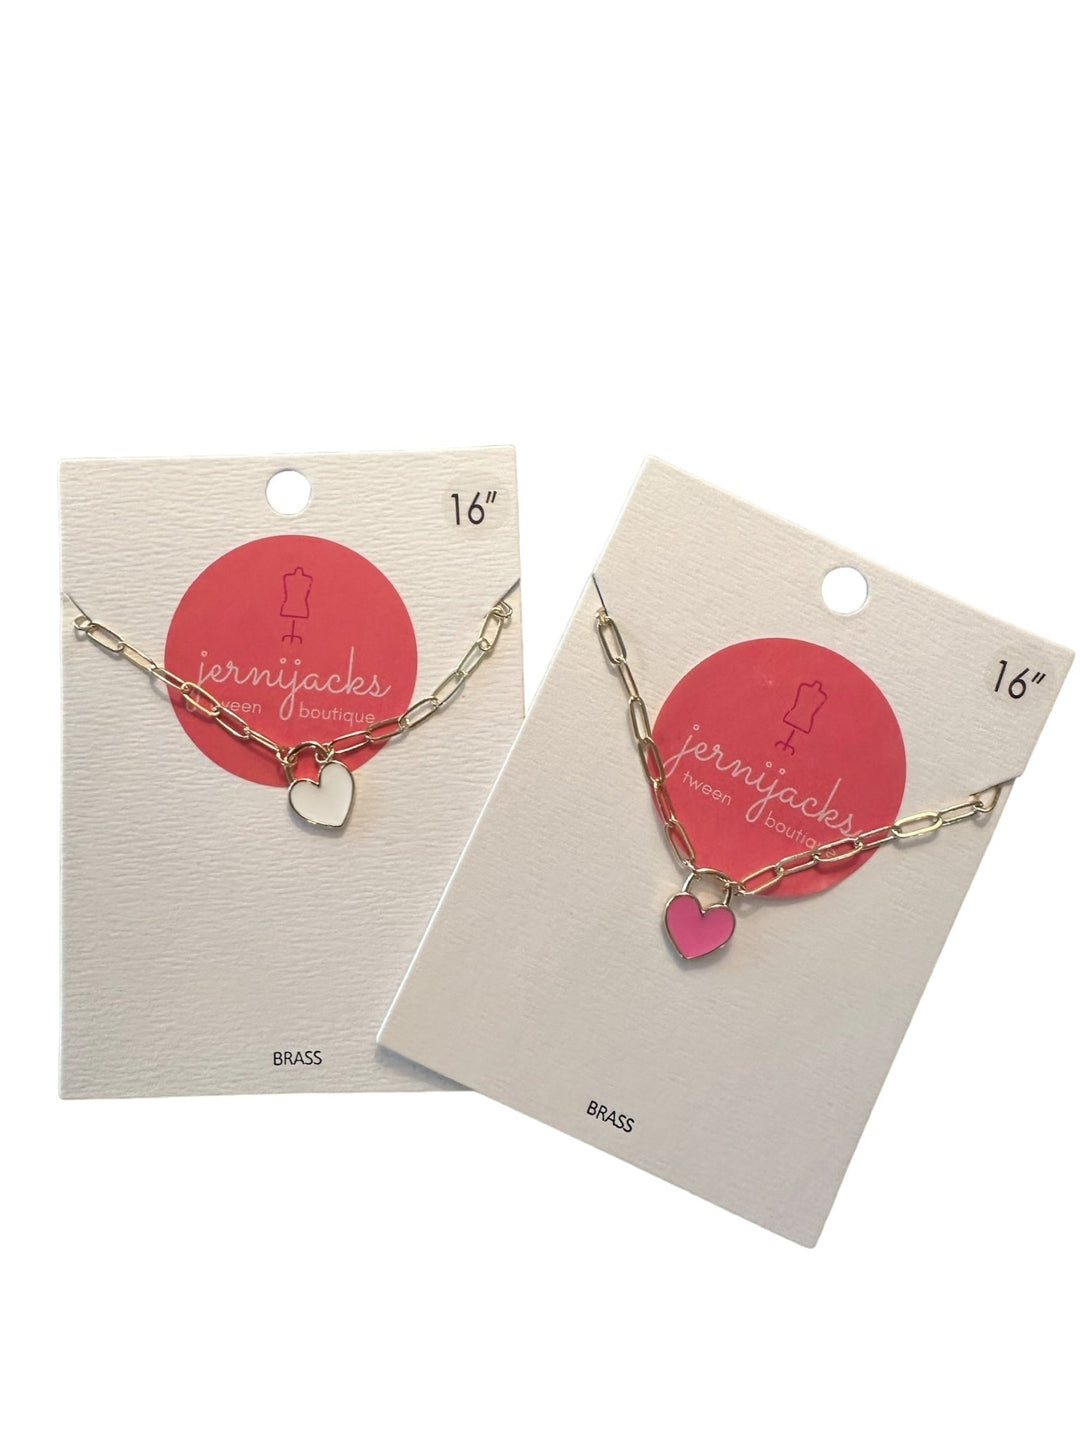 Heart Lock Chain Necklace - 2 Colors! - jernijacks